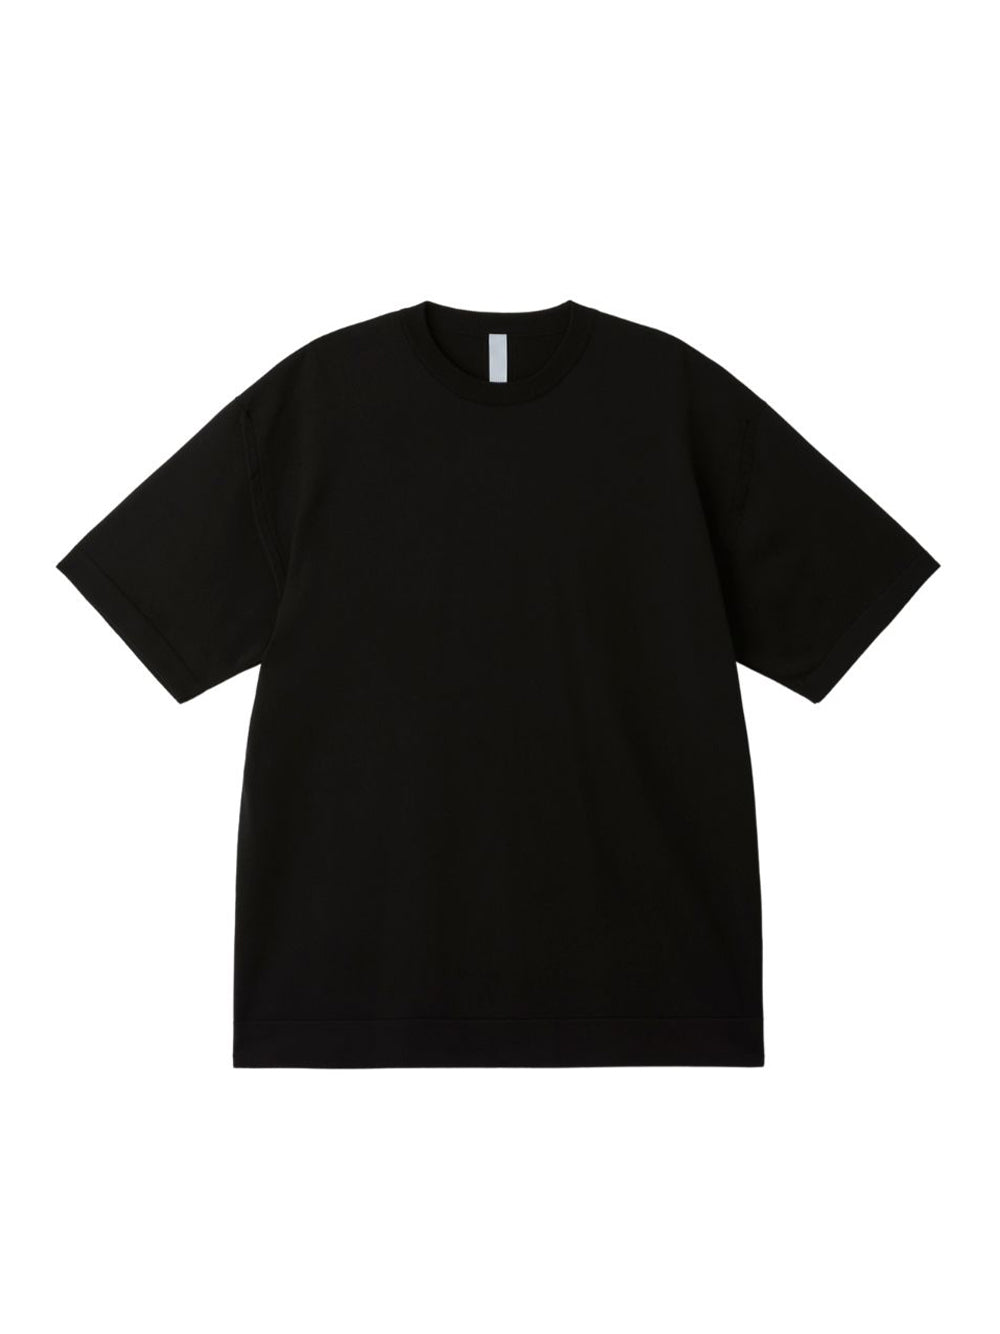 Bs High Gauge Short Sleeve Tee Shirt (Black)